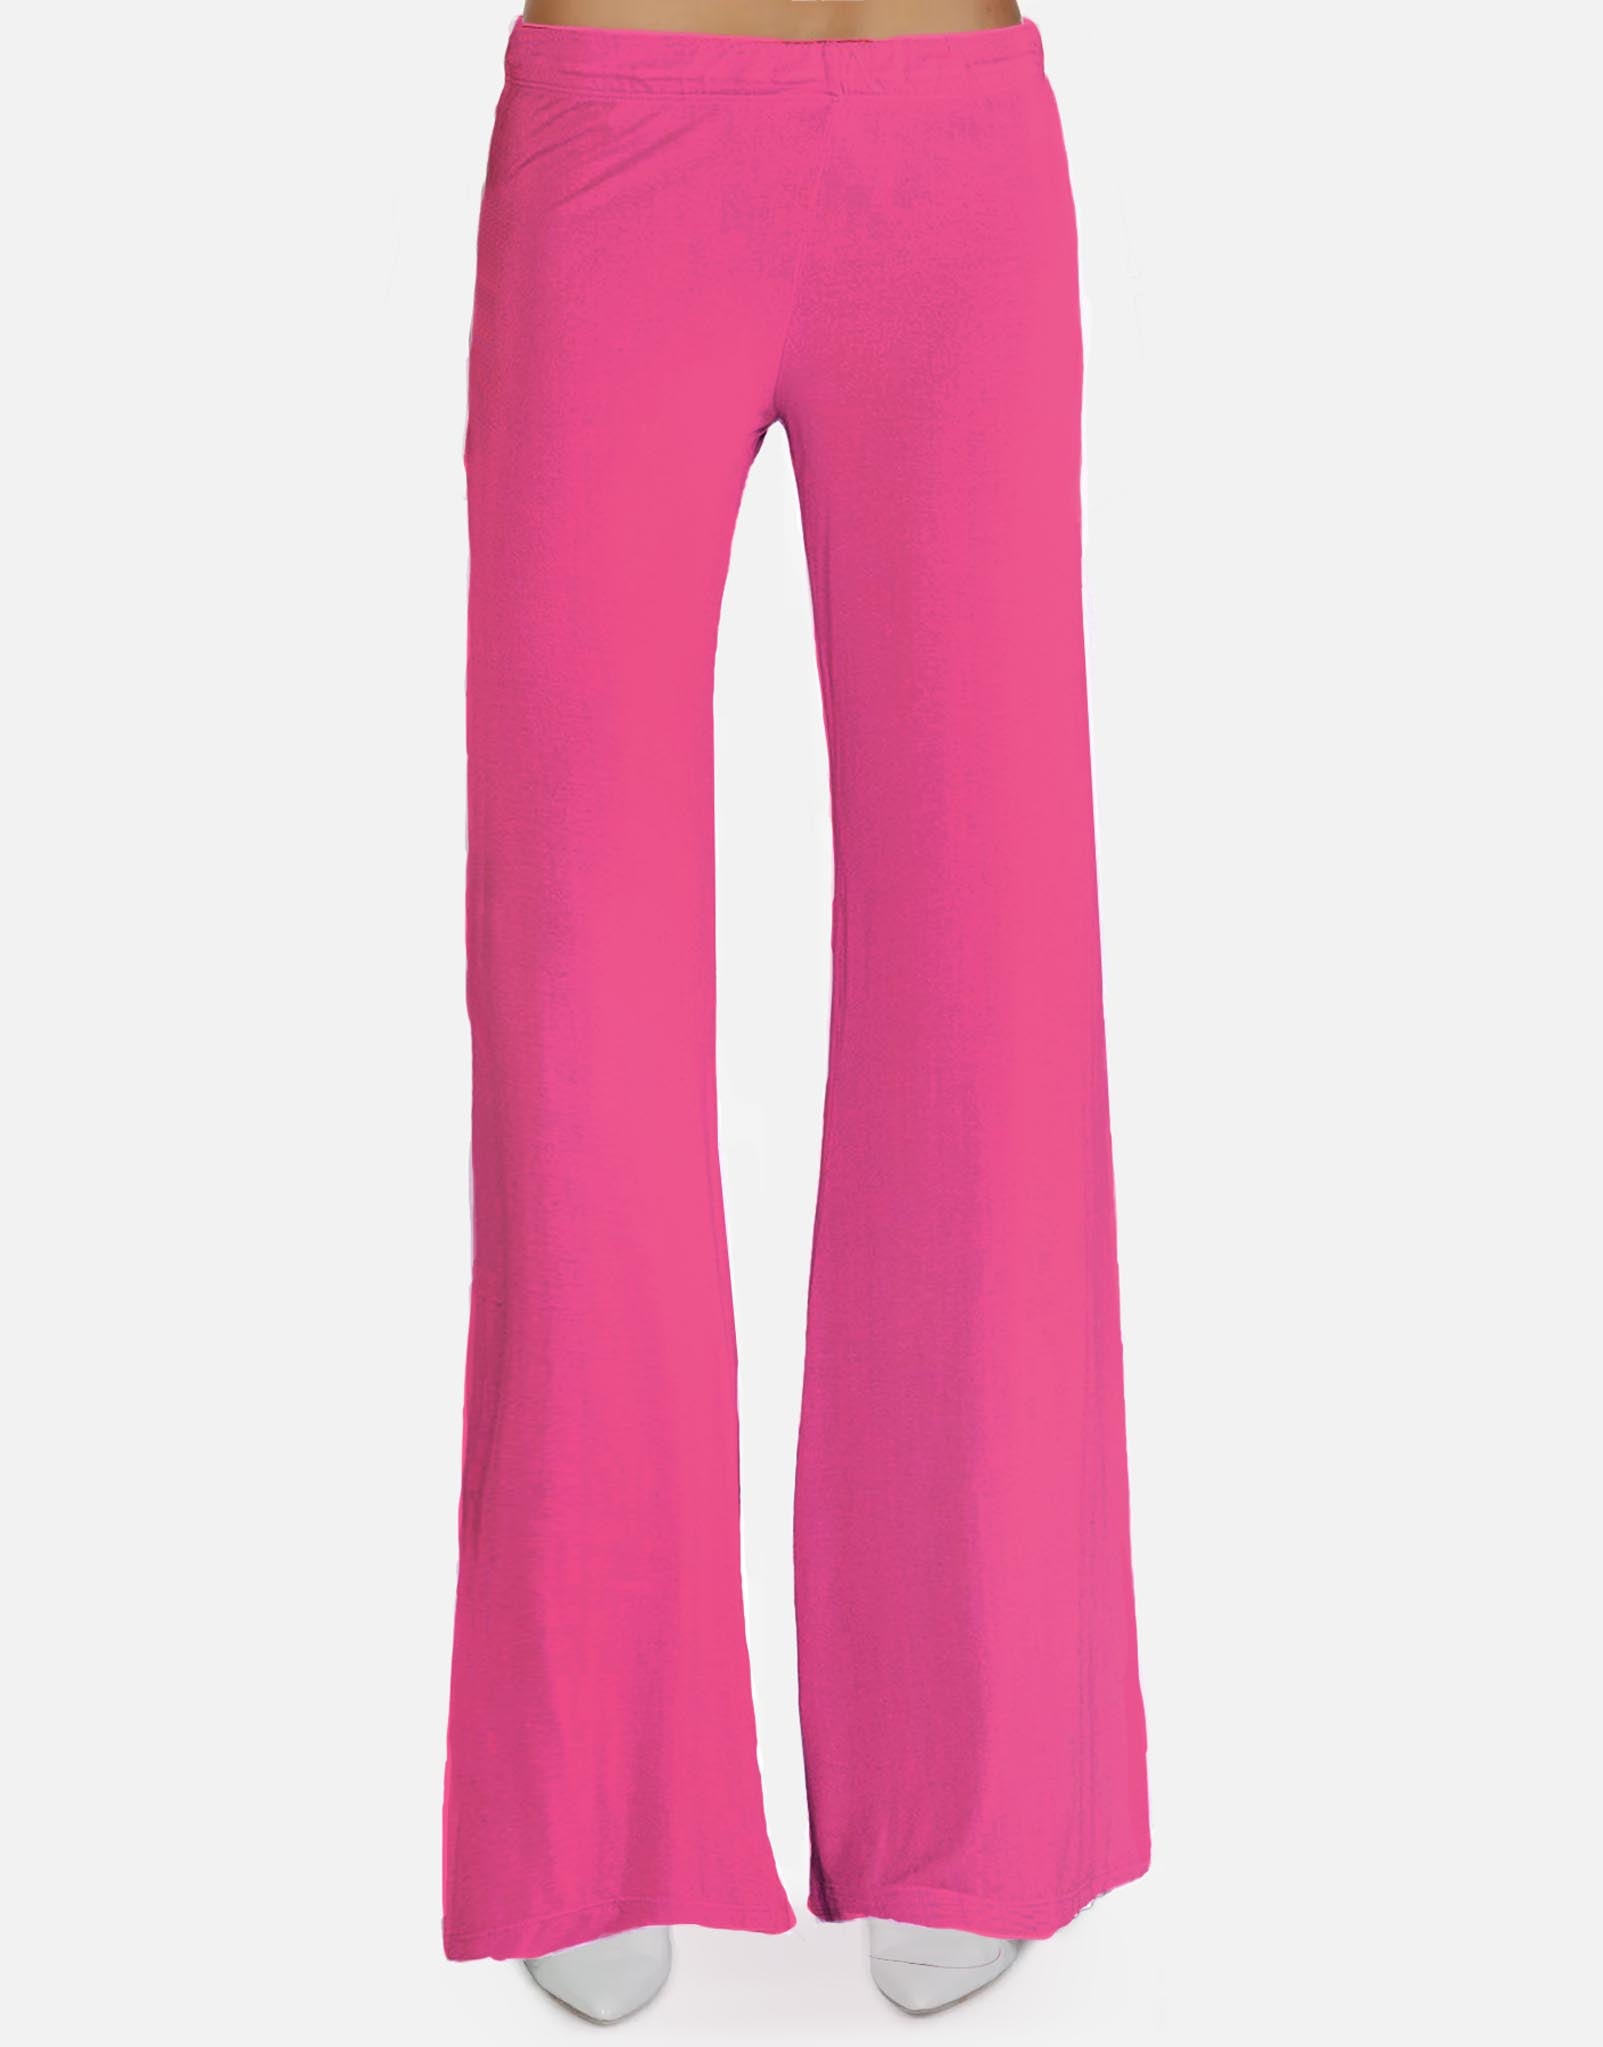 Derby Wide Leg Pant - Bright Pink XL